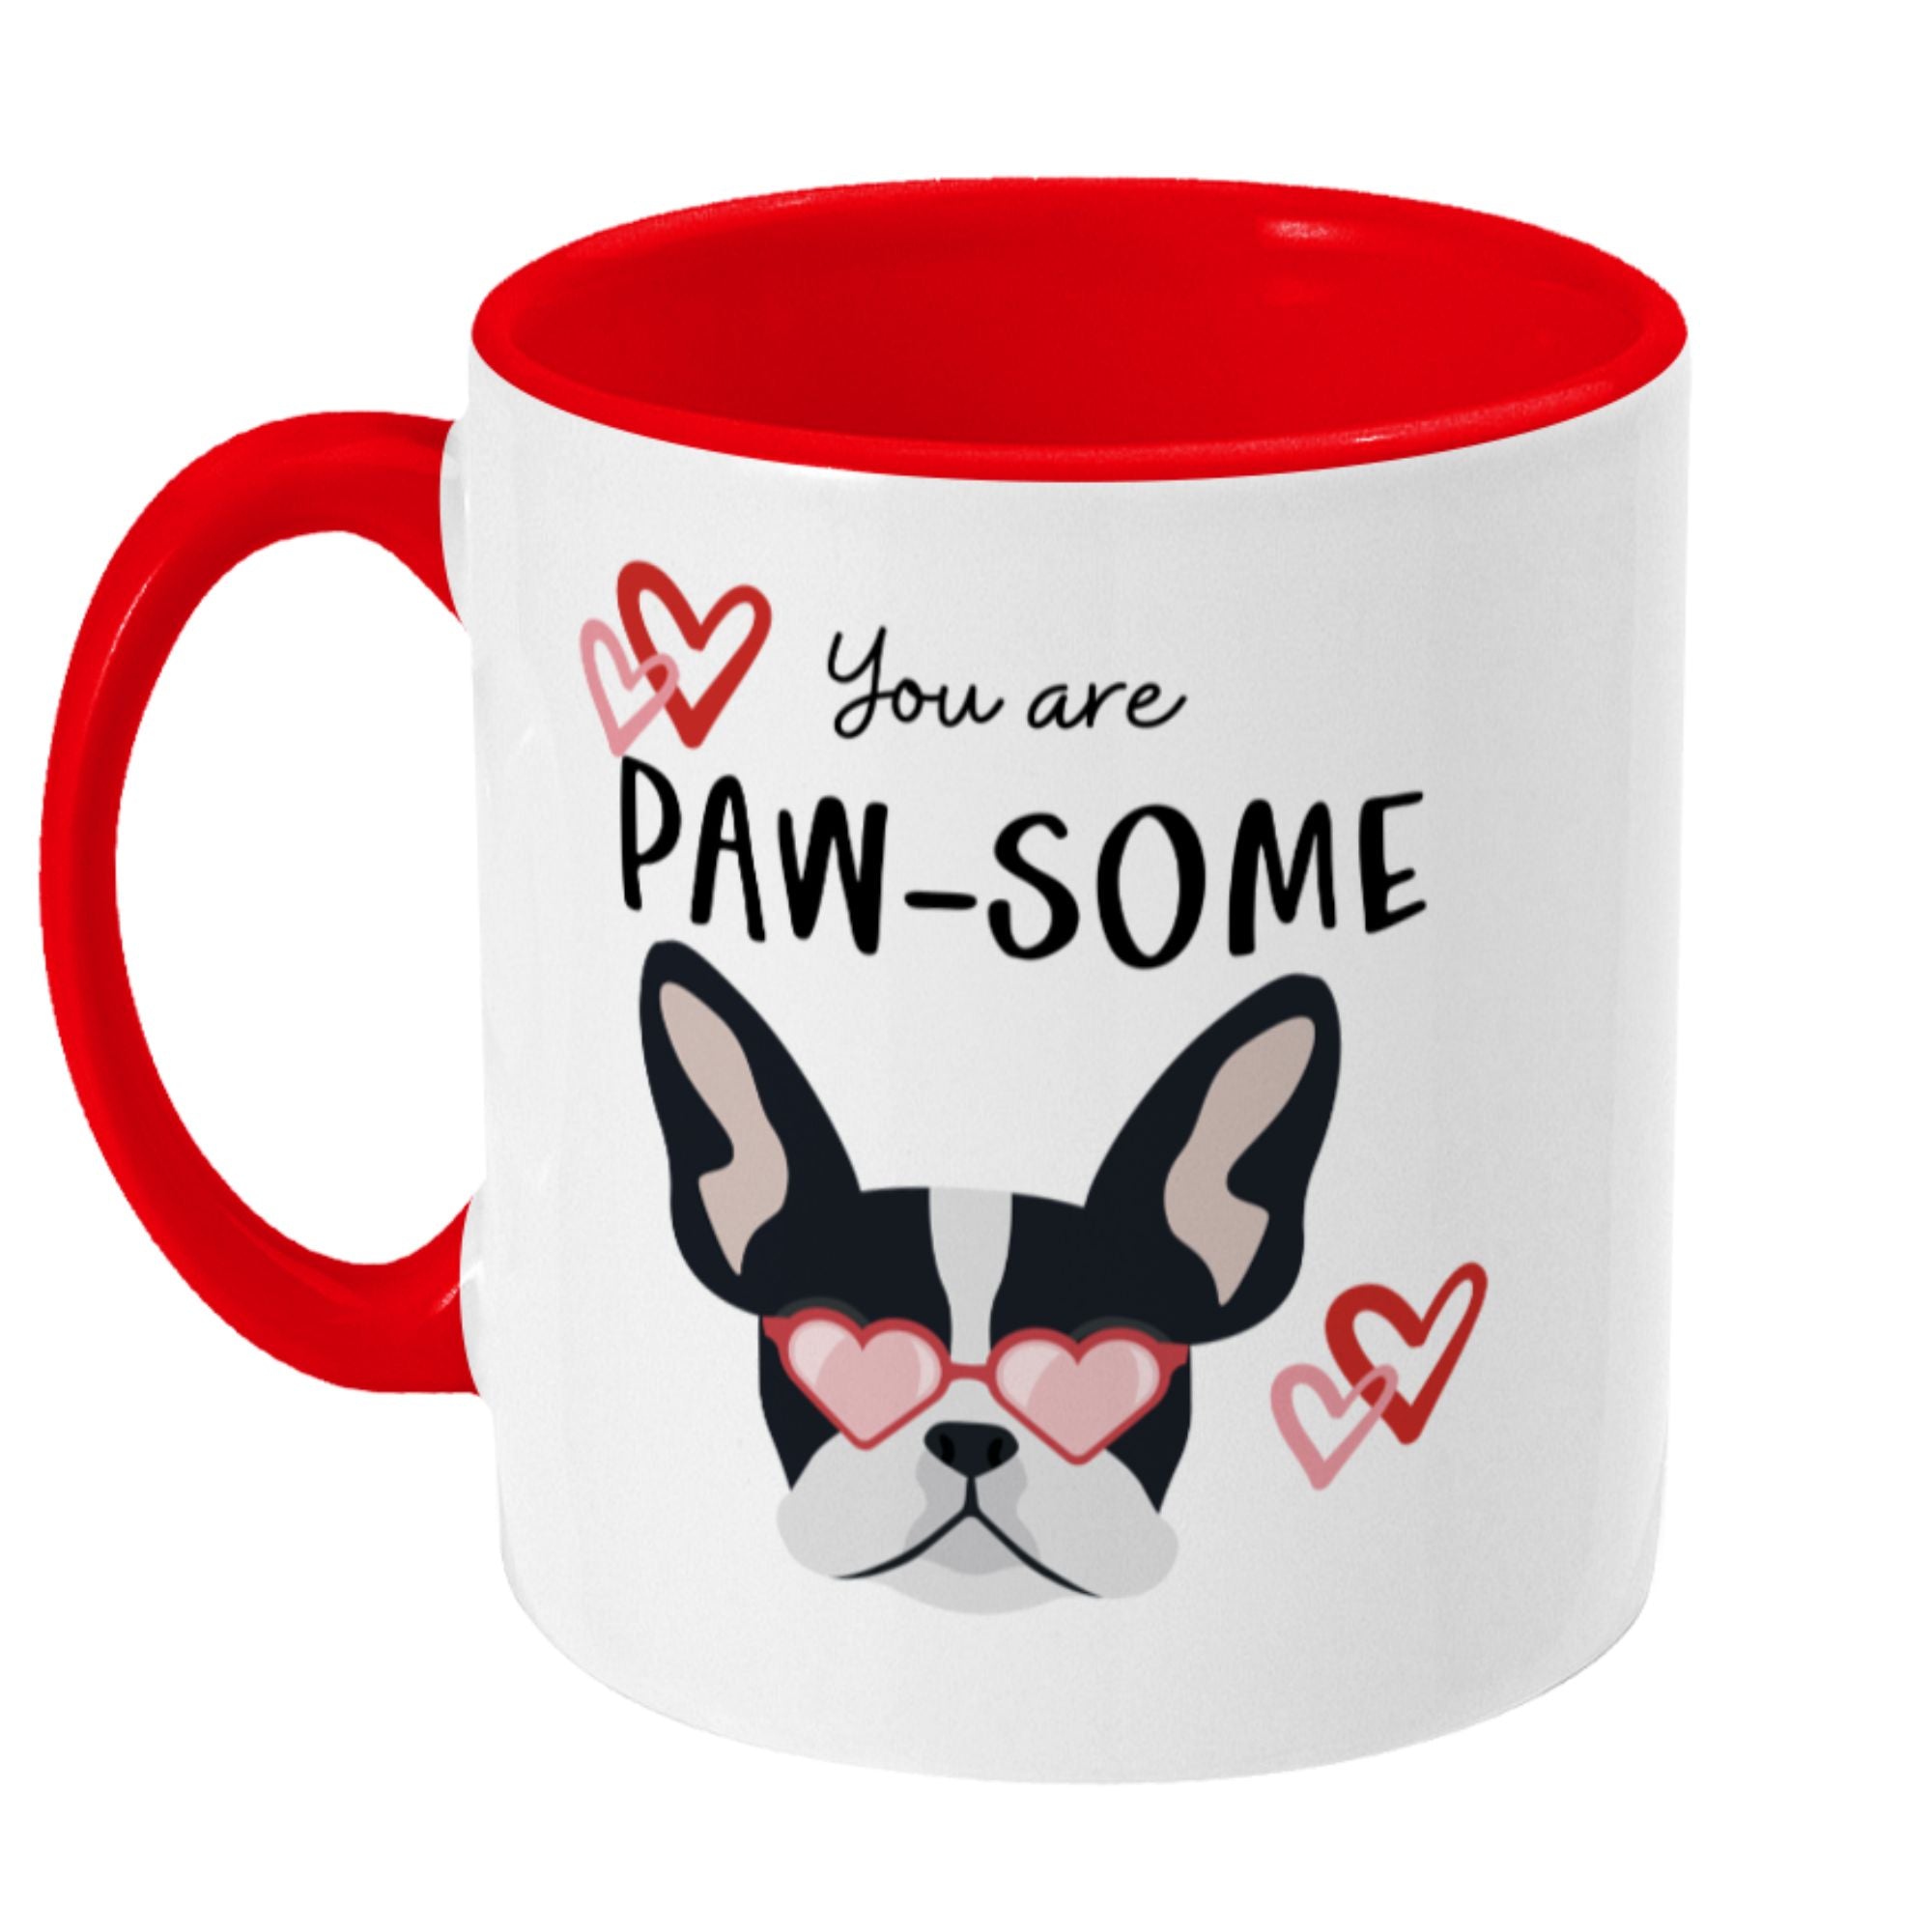 You are Paw-some Mug French Bulldog Mug - Sweetie